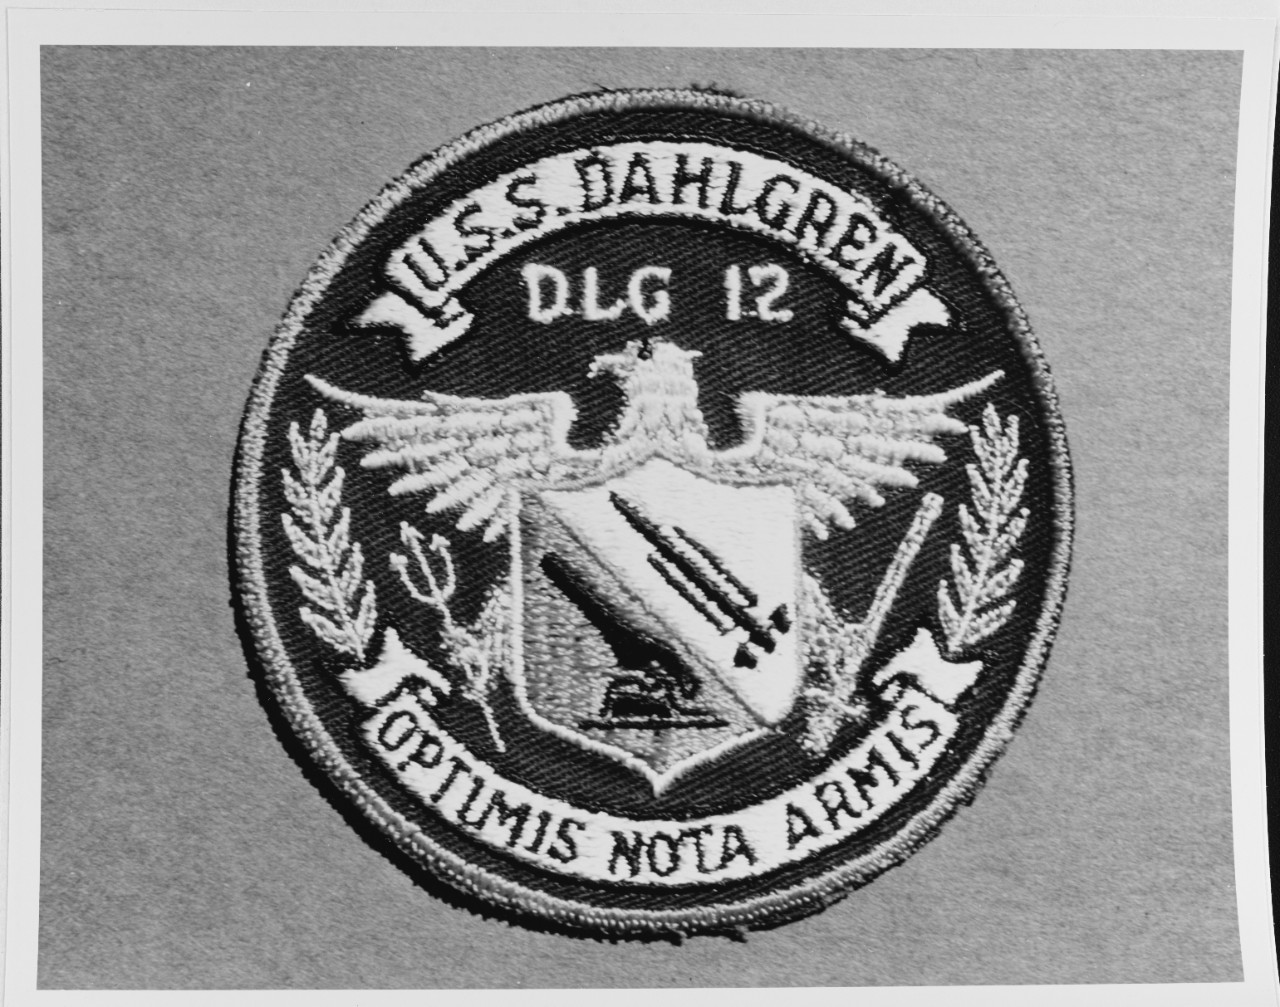 Insignia: USS DAHLGREN (DLG-12)